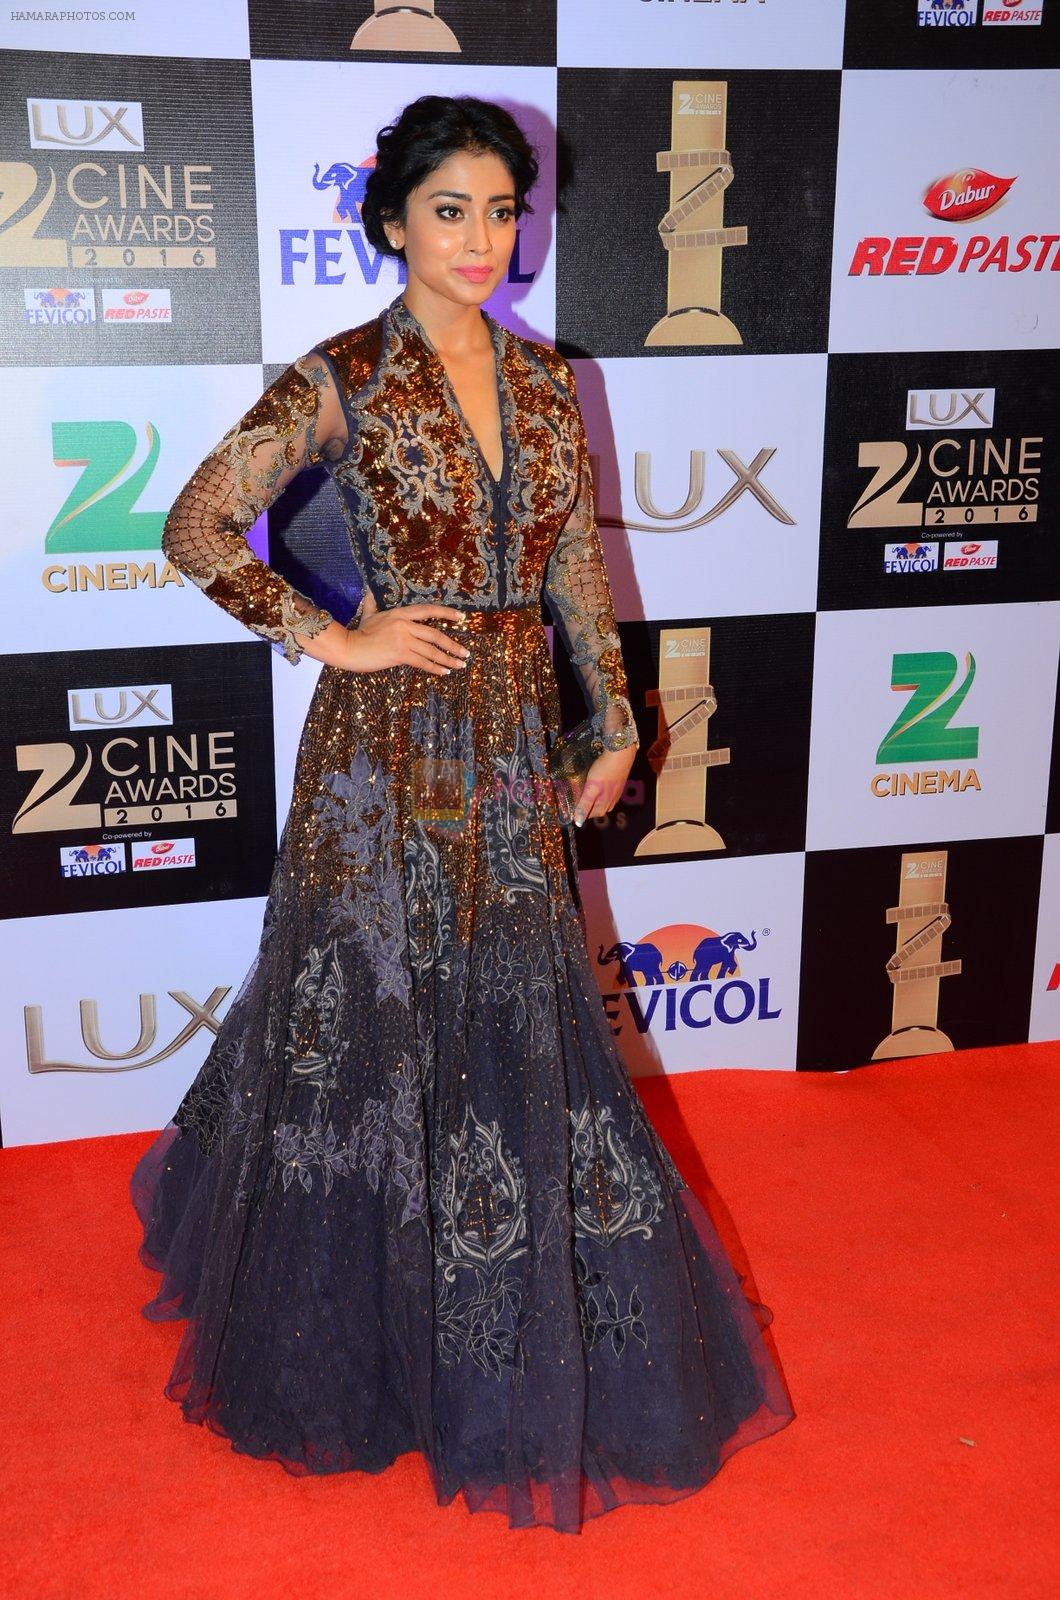 Shriya Saran at zee cine awards 2016 on 20th Feb 2016